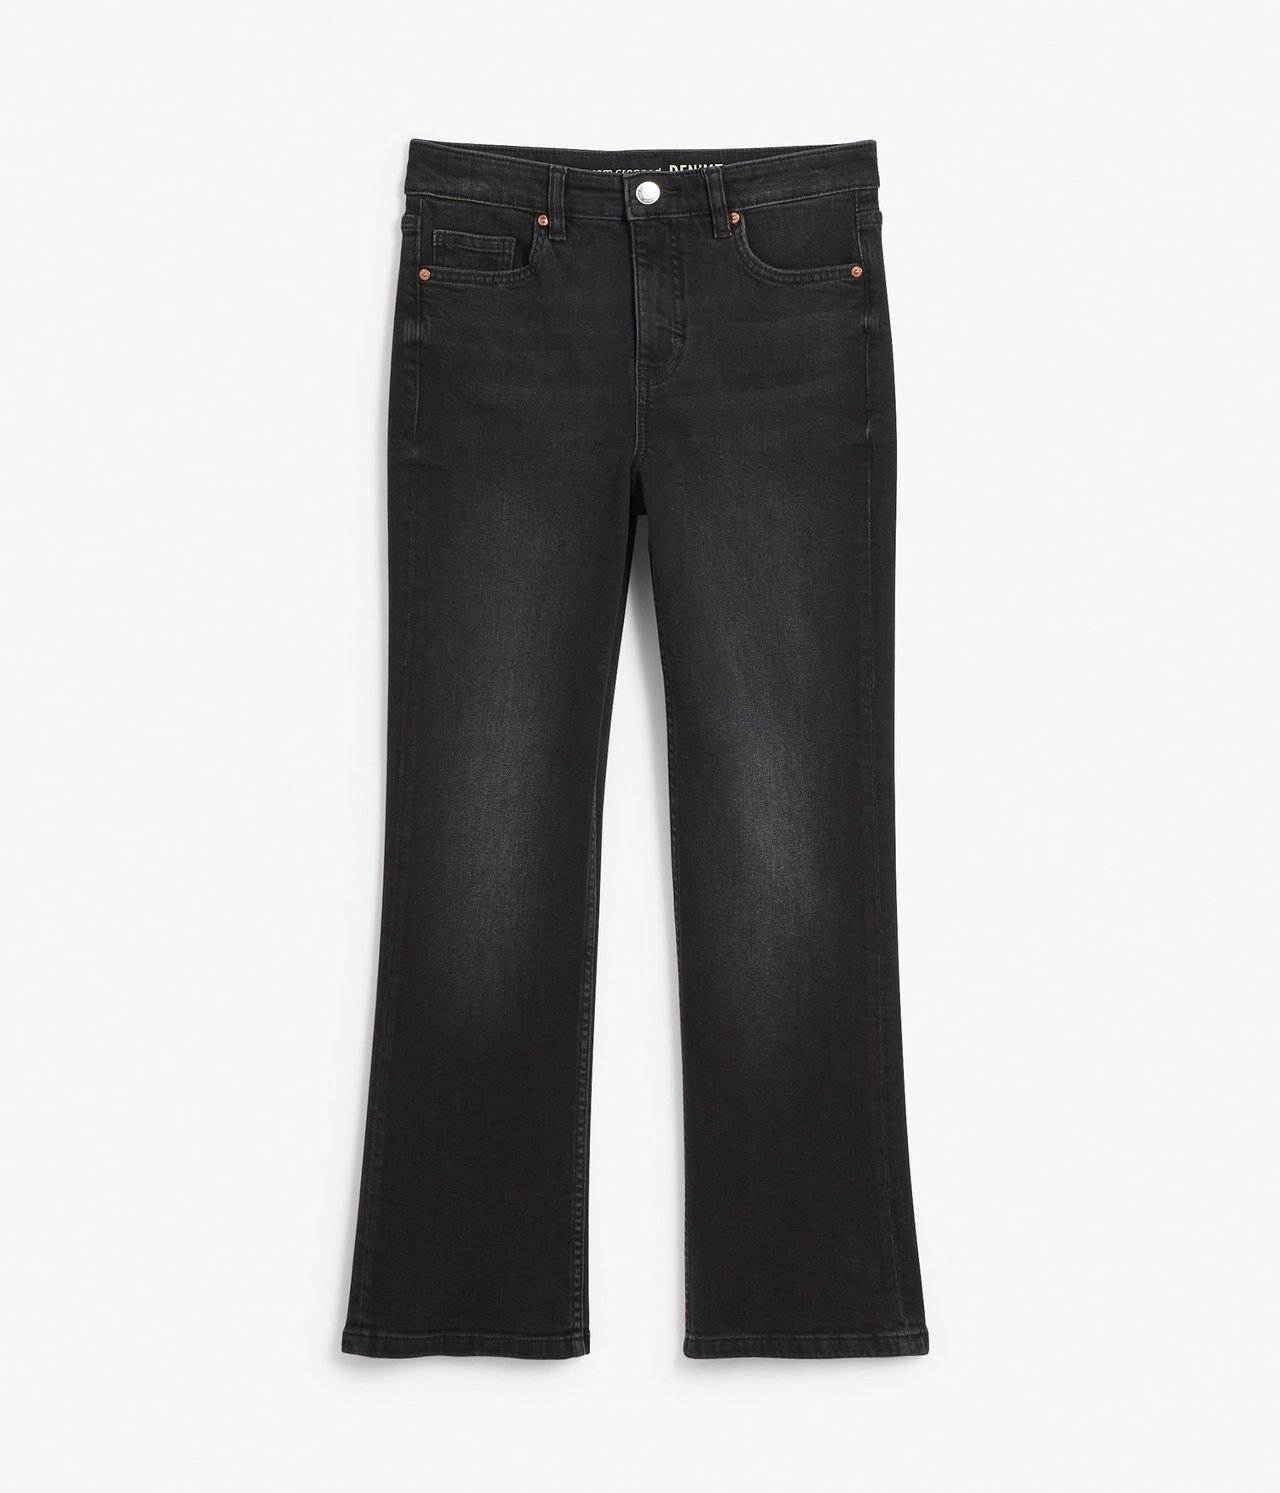 Cropped flare jeans regular waist Pesty musta denimi - null - 1